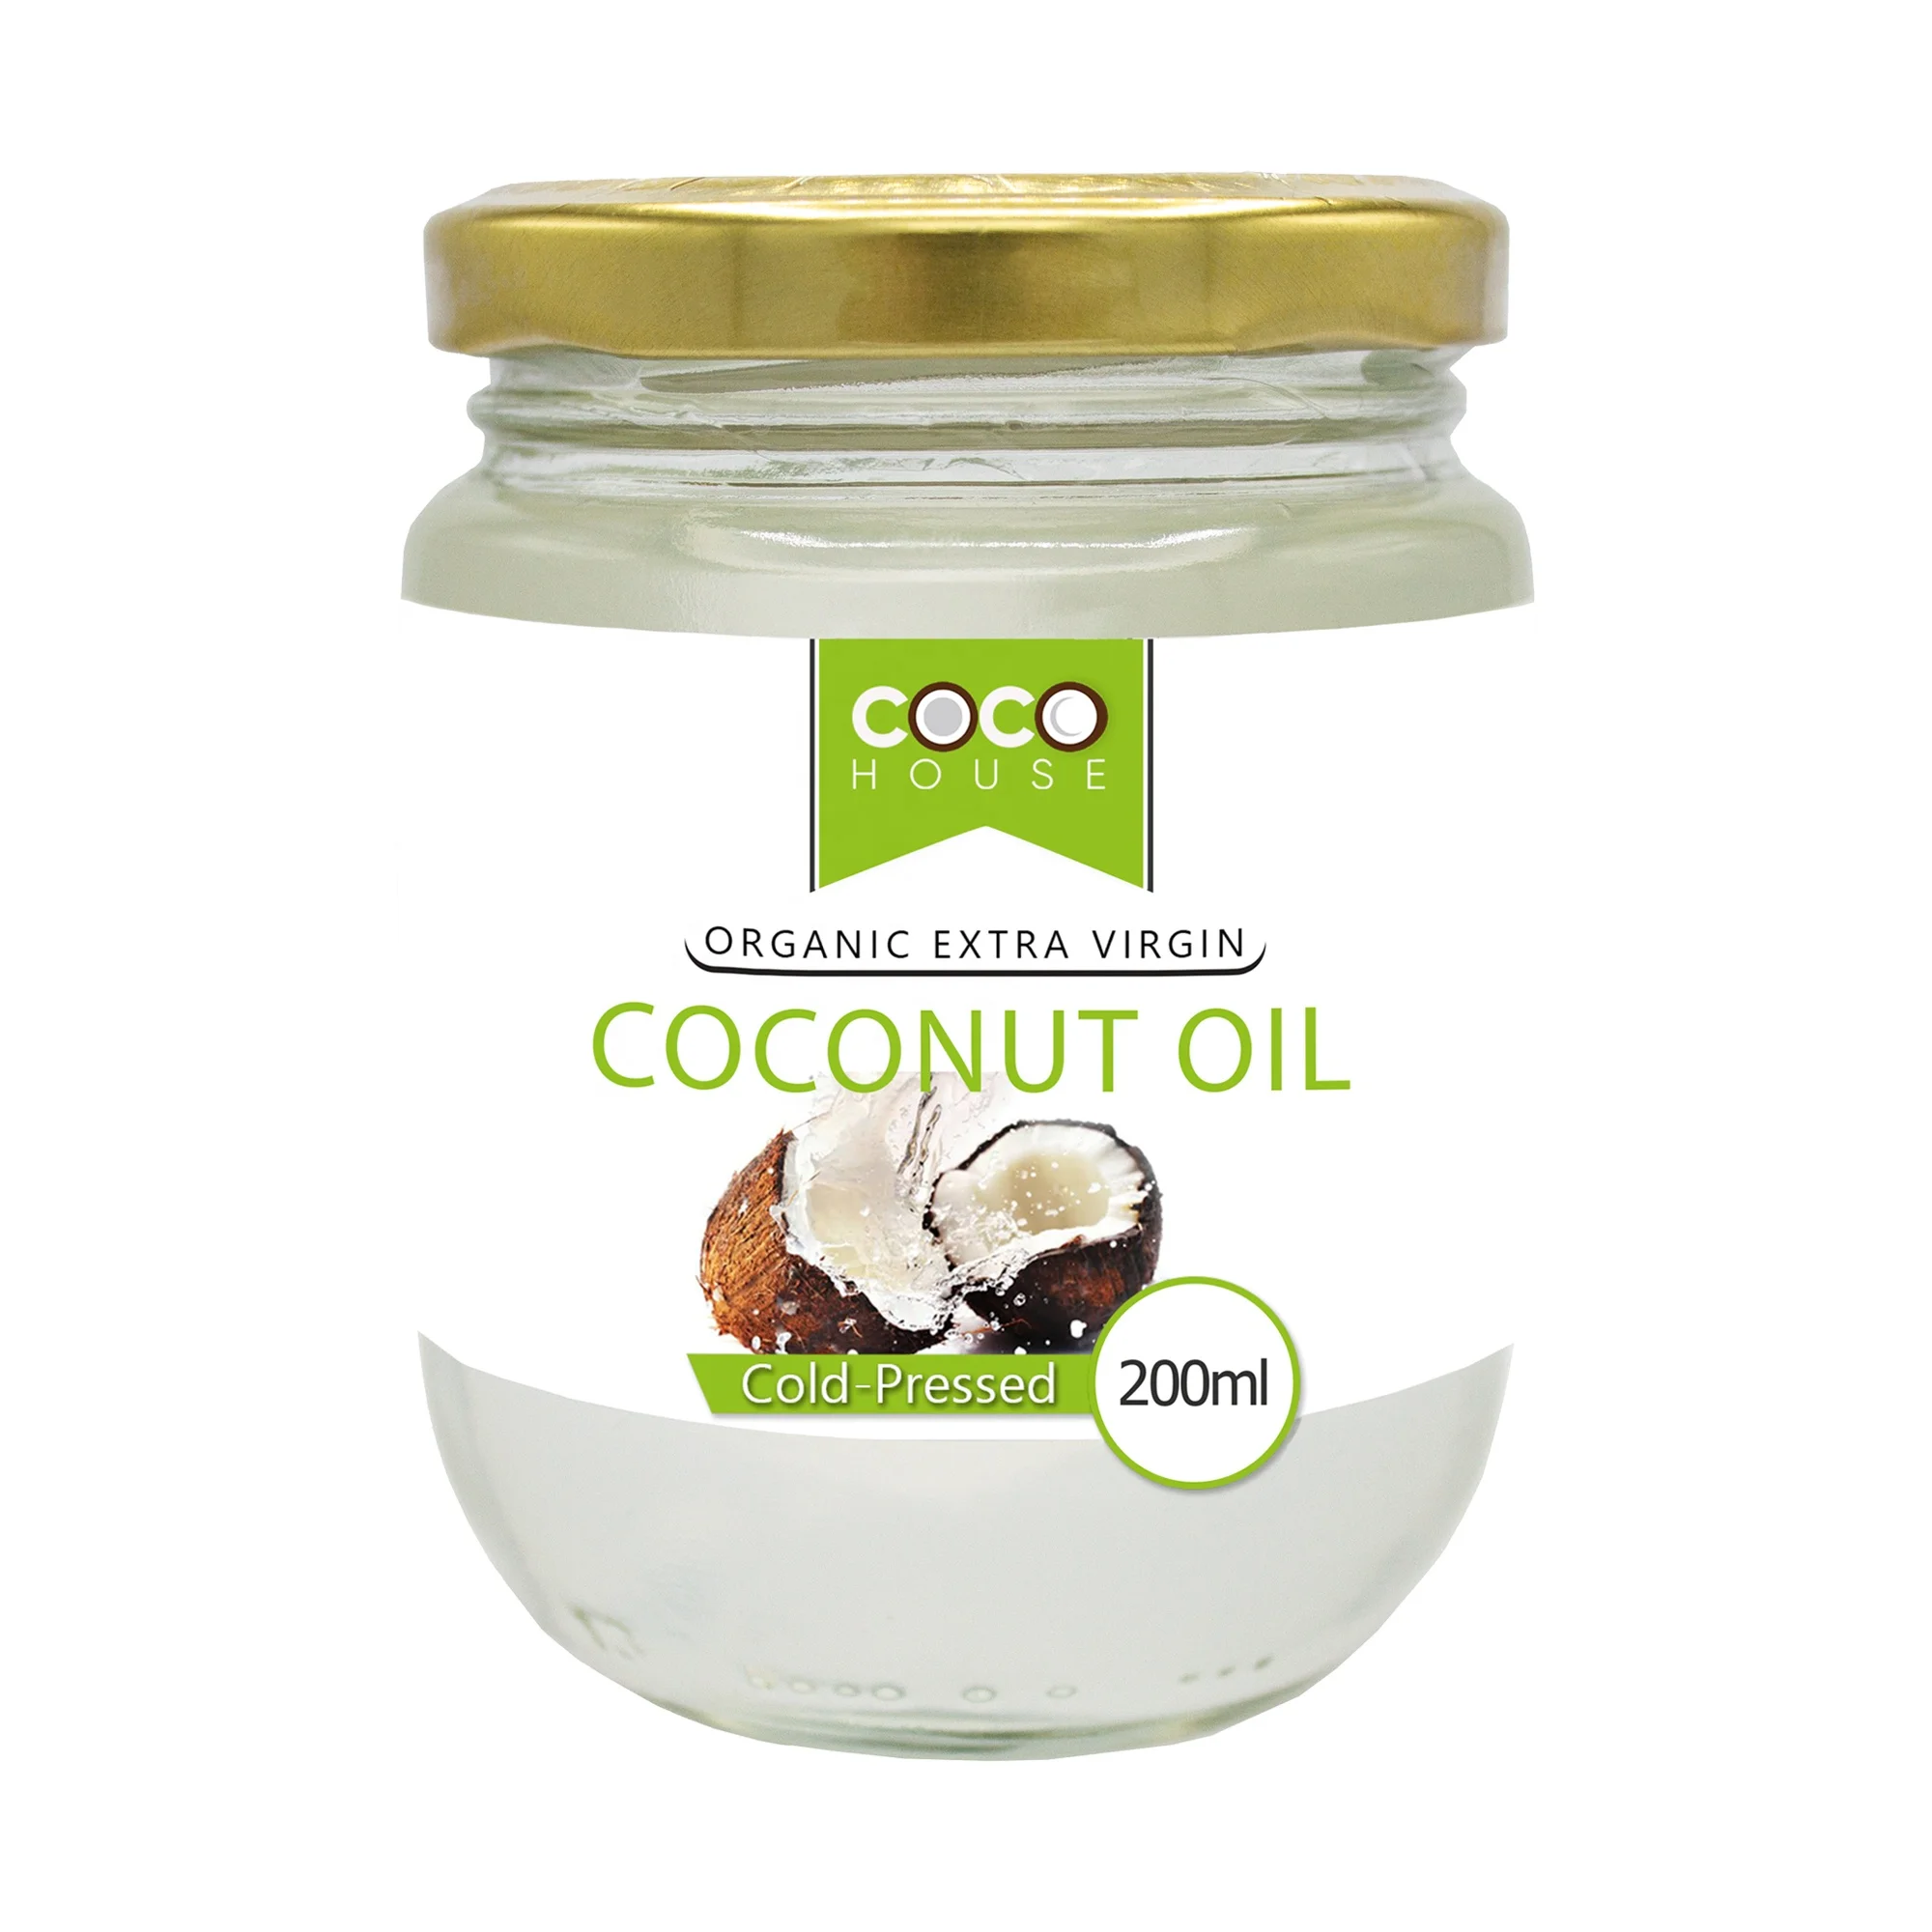 Coco House Organic Extra Virgin Coconut Oil 200ml Glass Jar